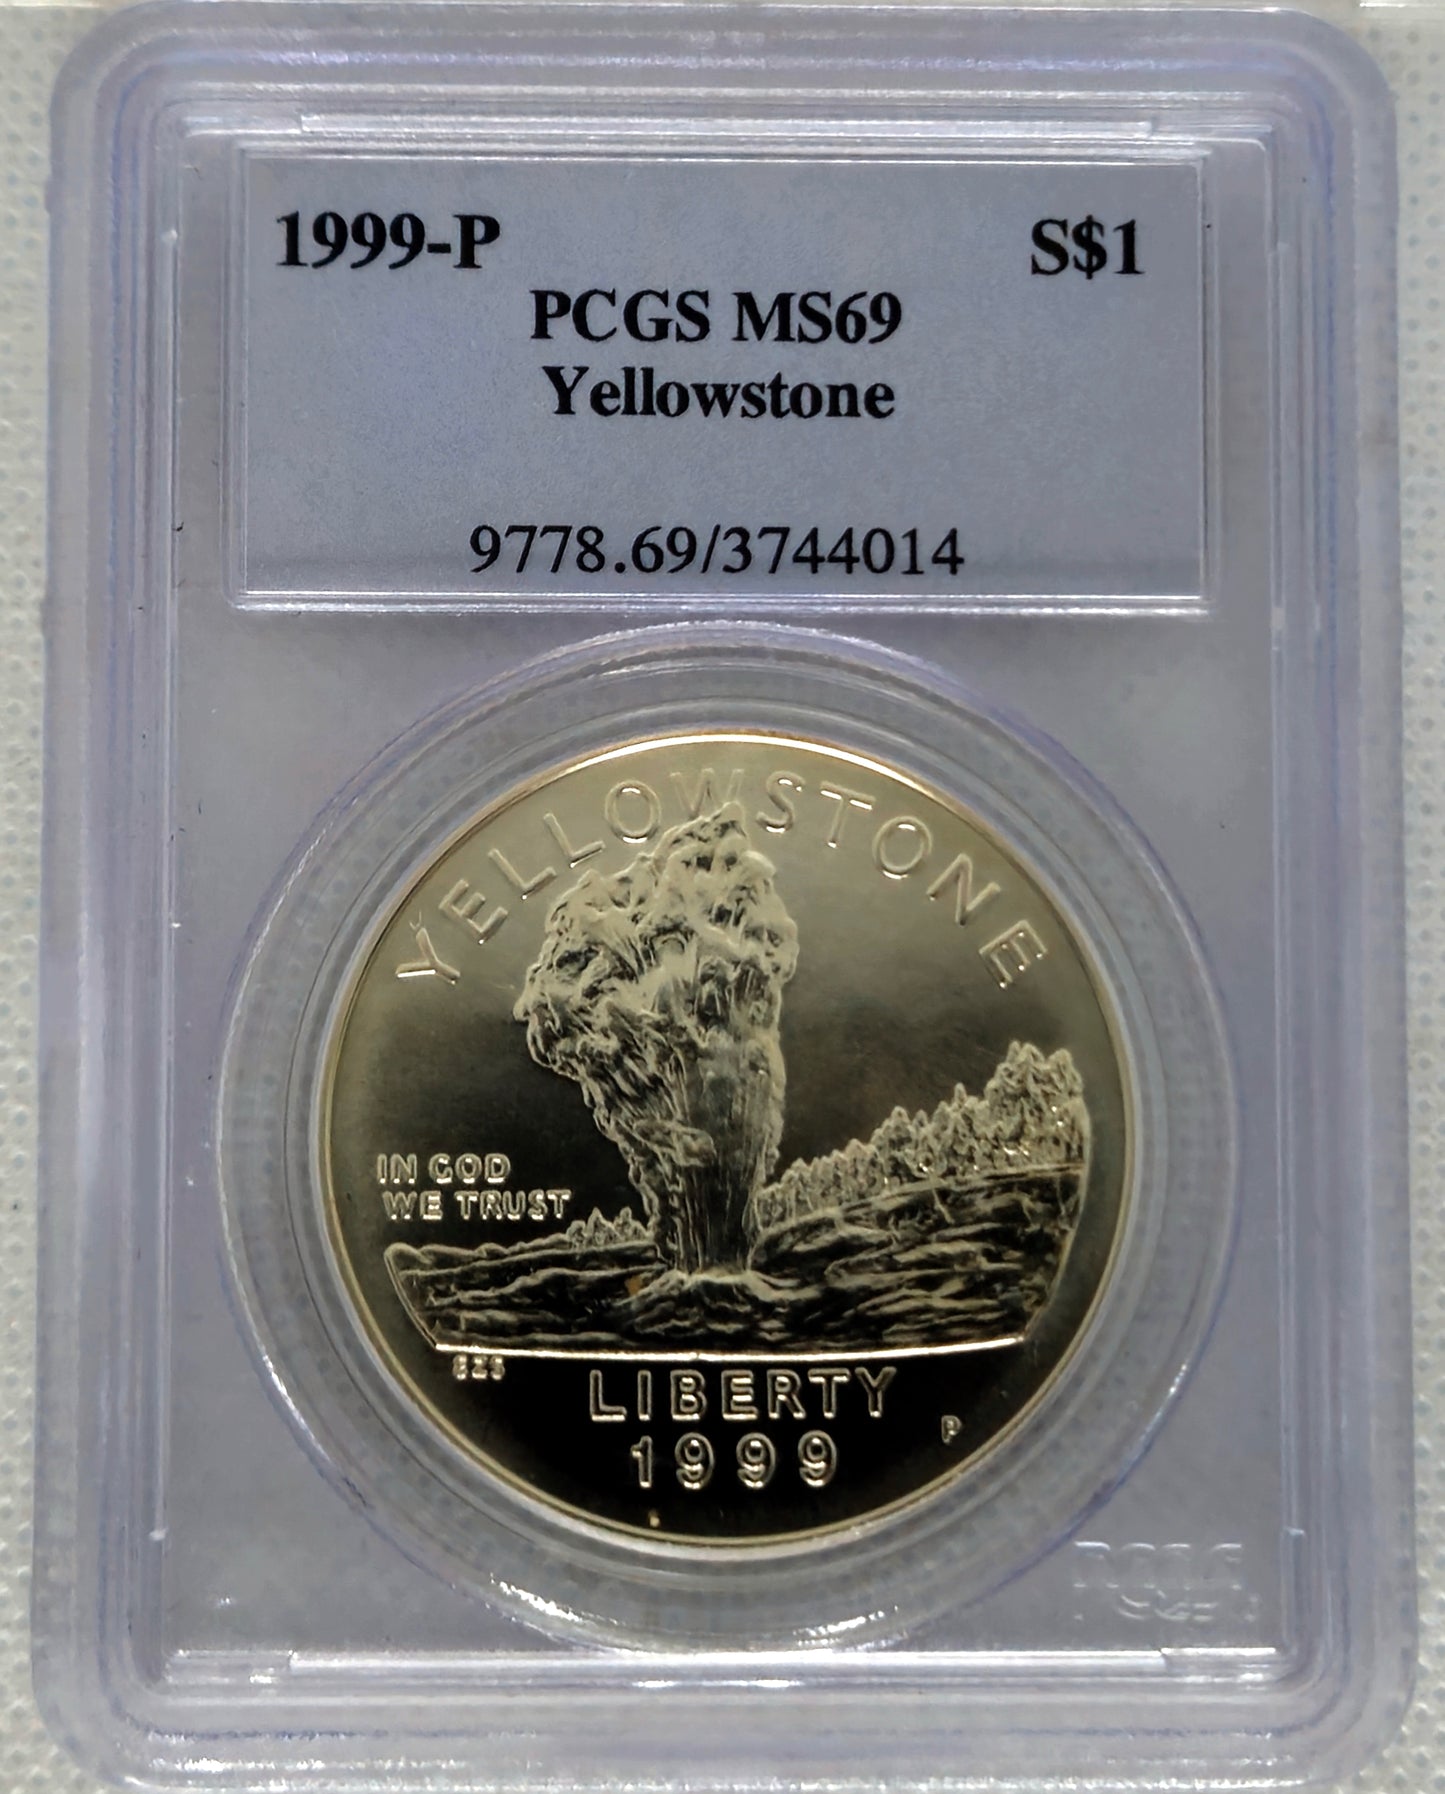 1999-P Yellowstone PCGS MS 69 Commemorative Silver Dollar